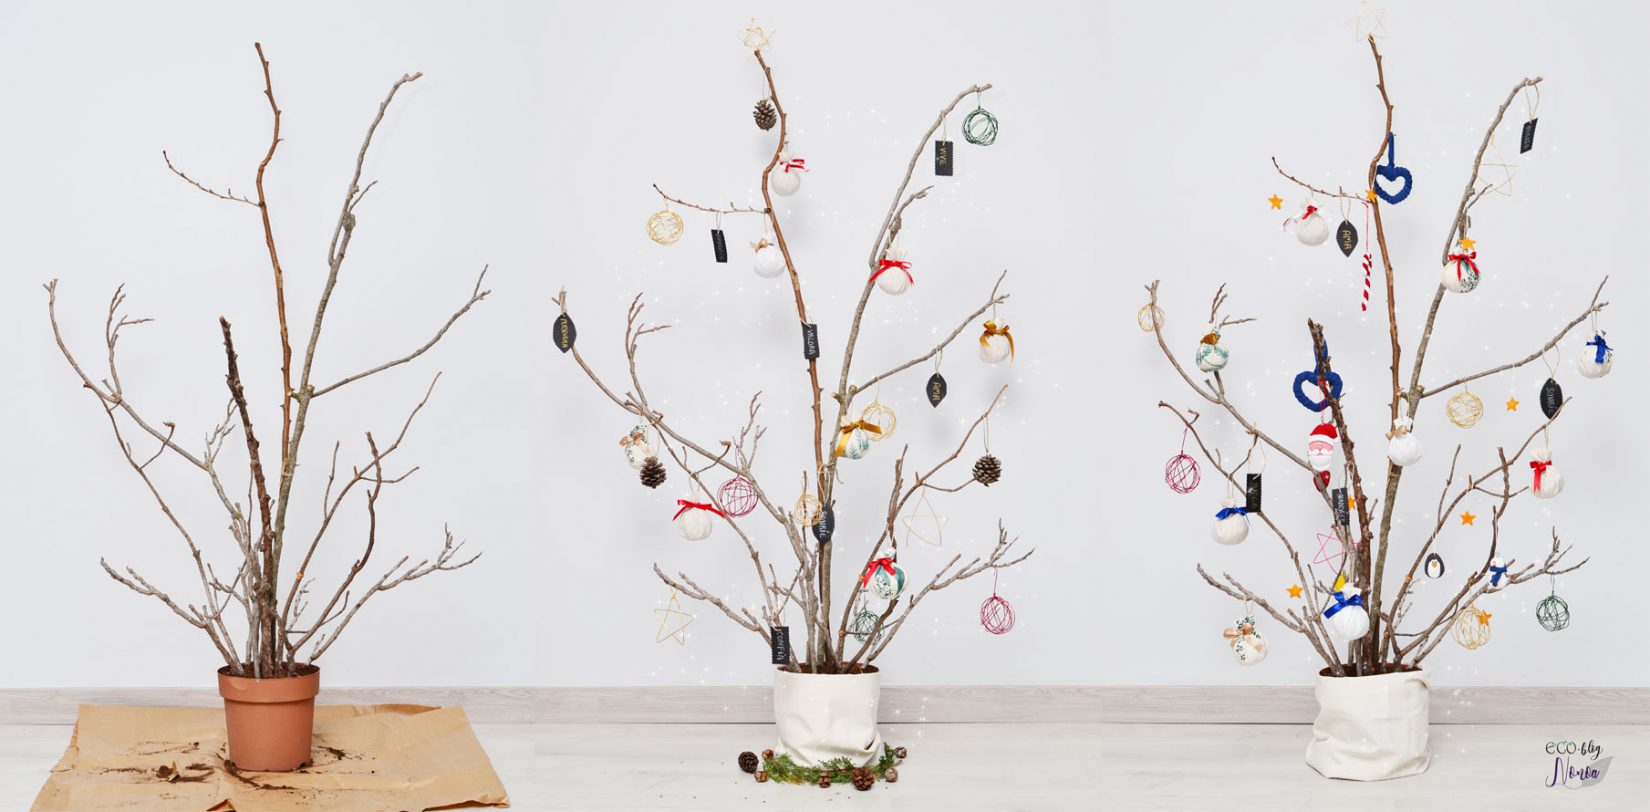 Árbol de navidad natura hecho con ramas y con adornos hechos a mano -  Ecoblog Nonoa - Ecoblog Nonoa